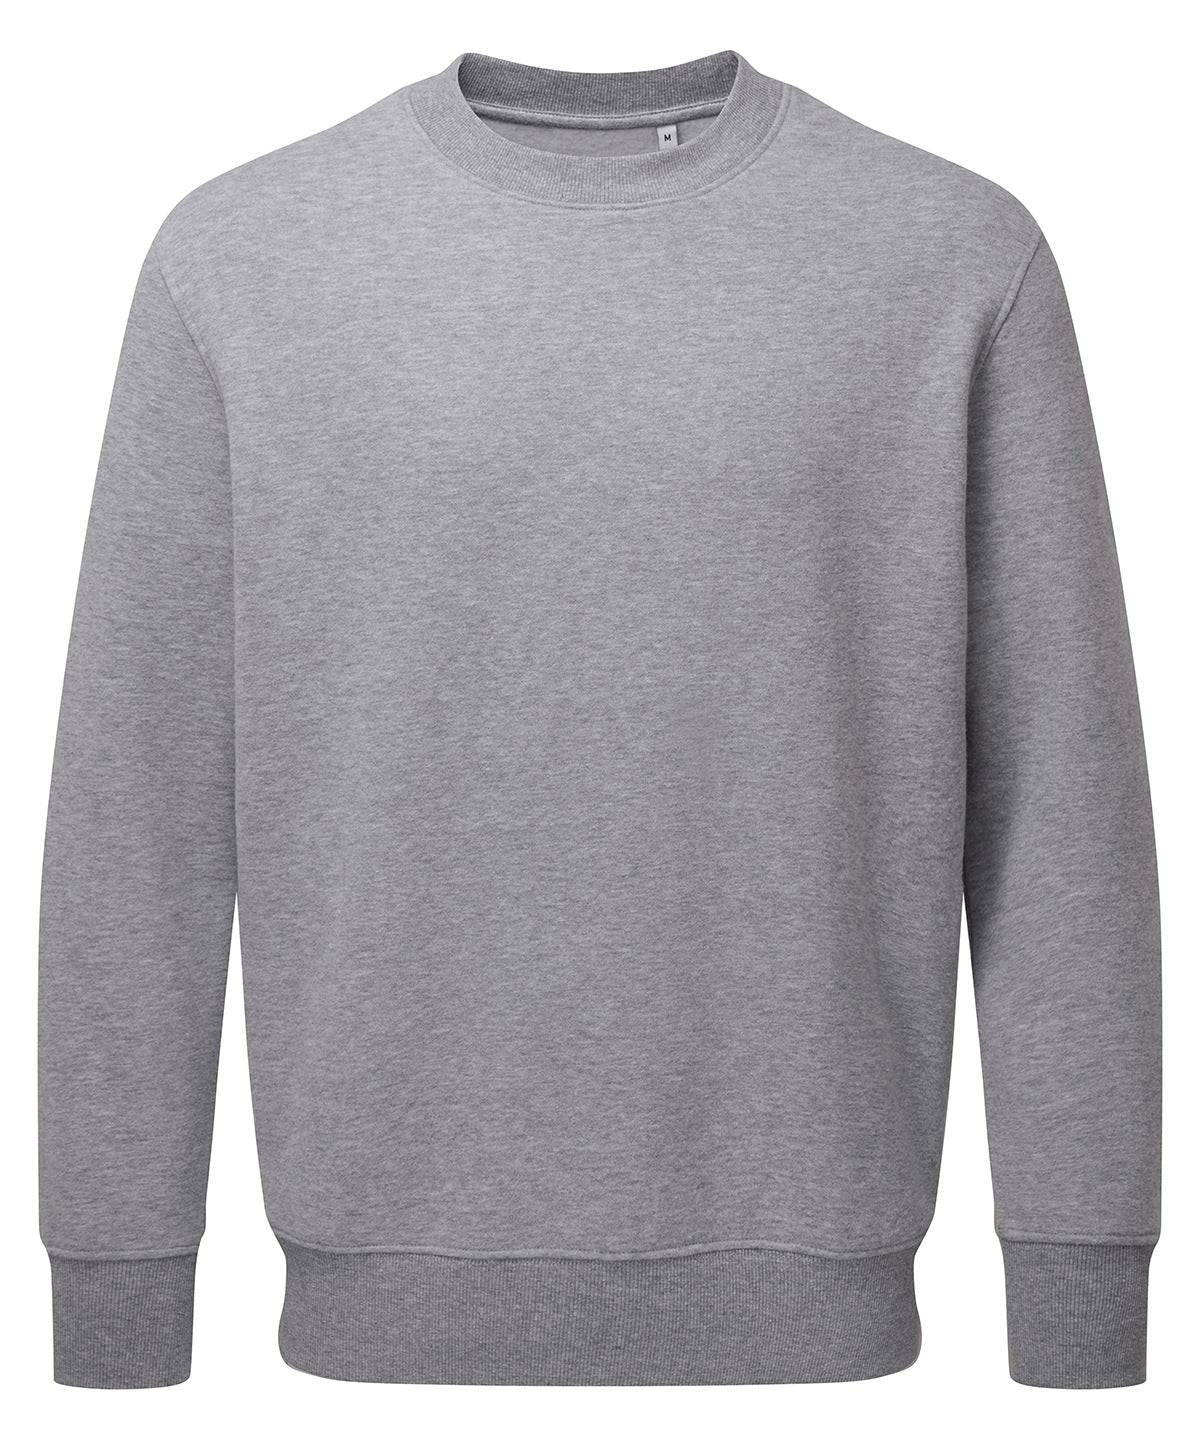 Grey Marl - Anthem sweatshirt